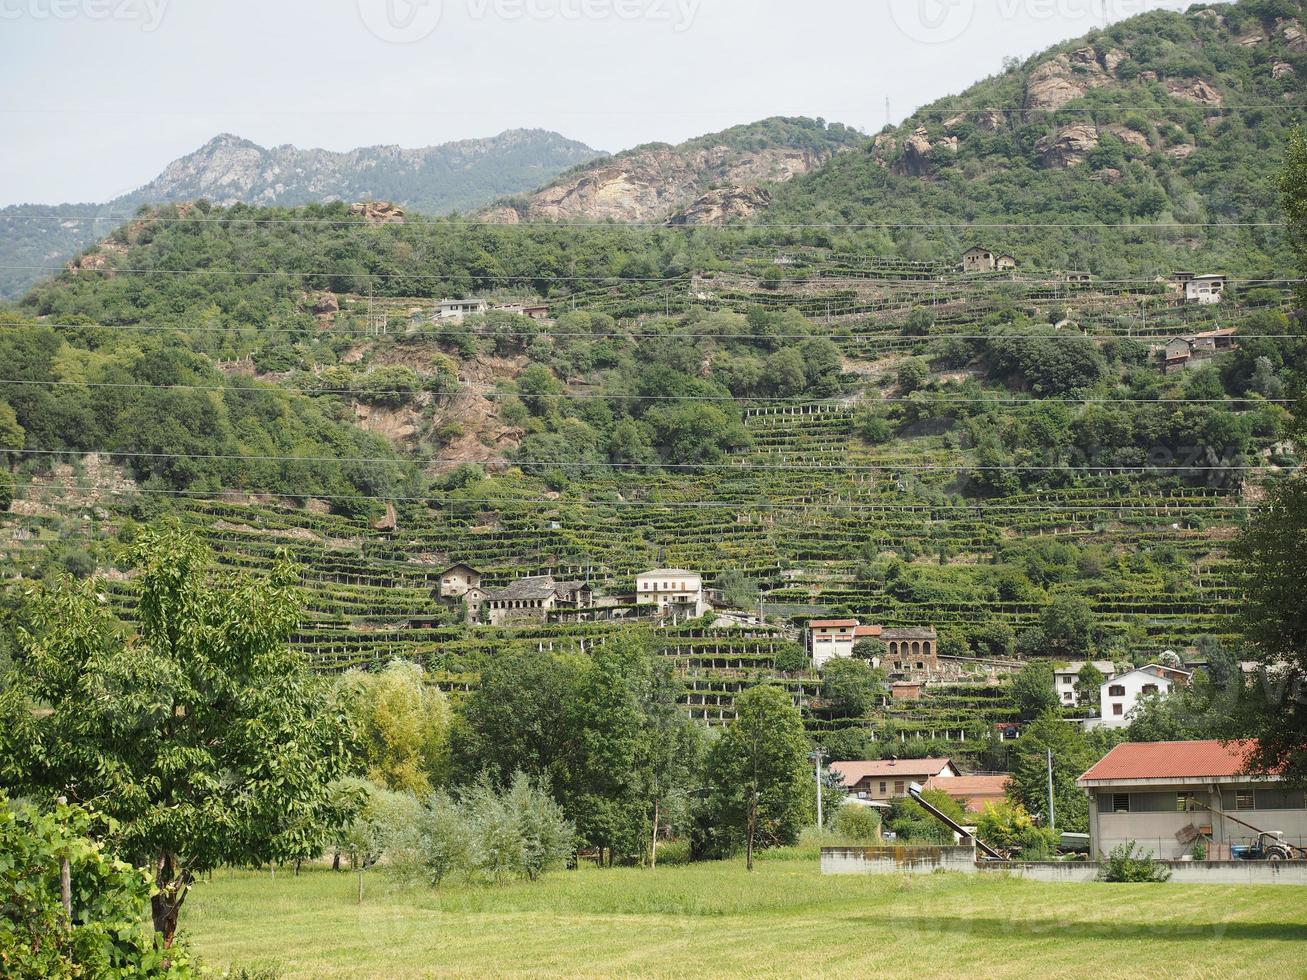 Vineyard in Aosta Valley, Italy photo